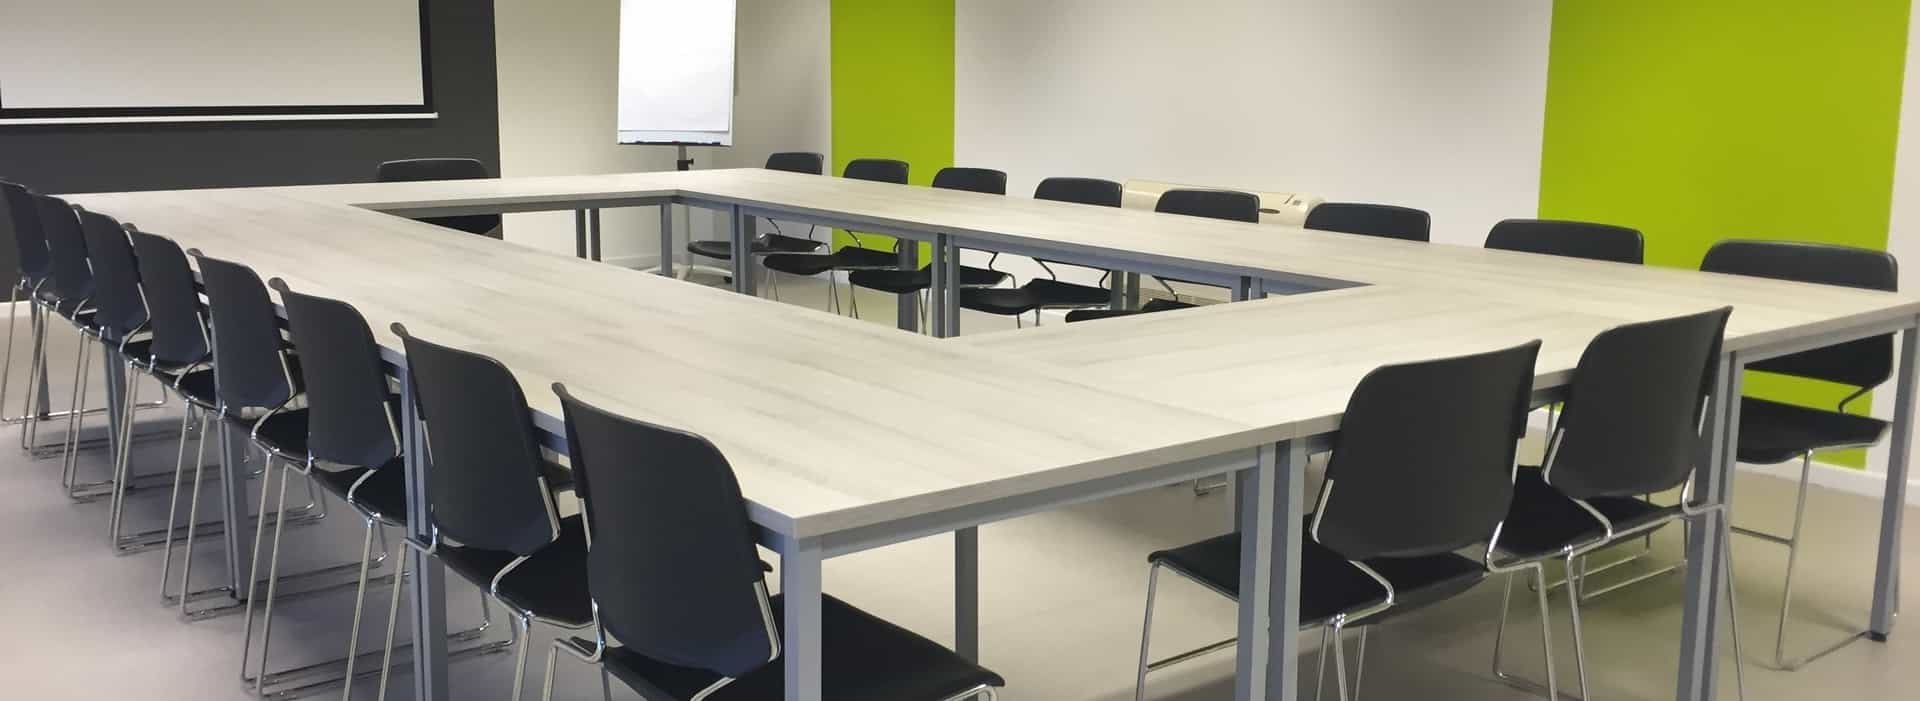 mazevo empty conference room